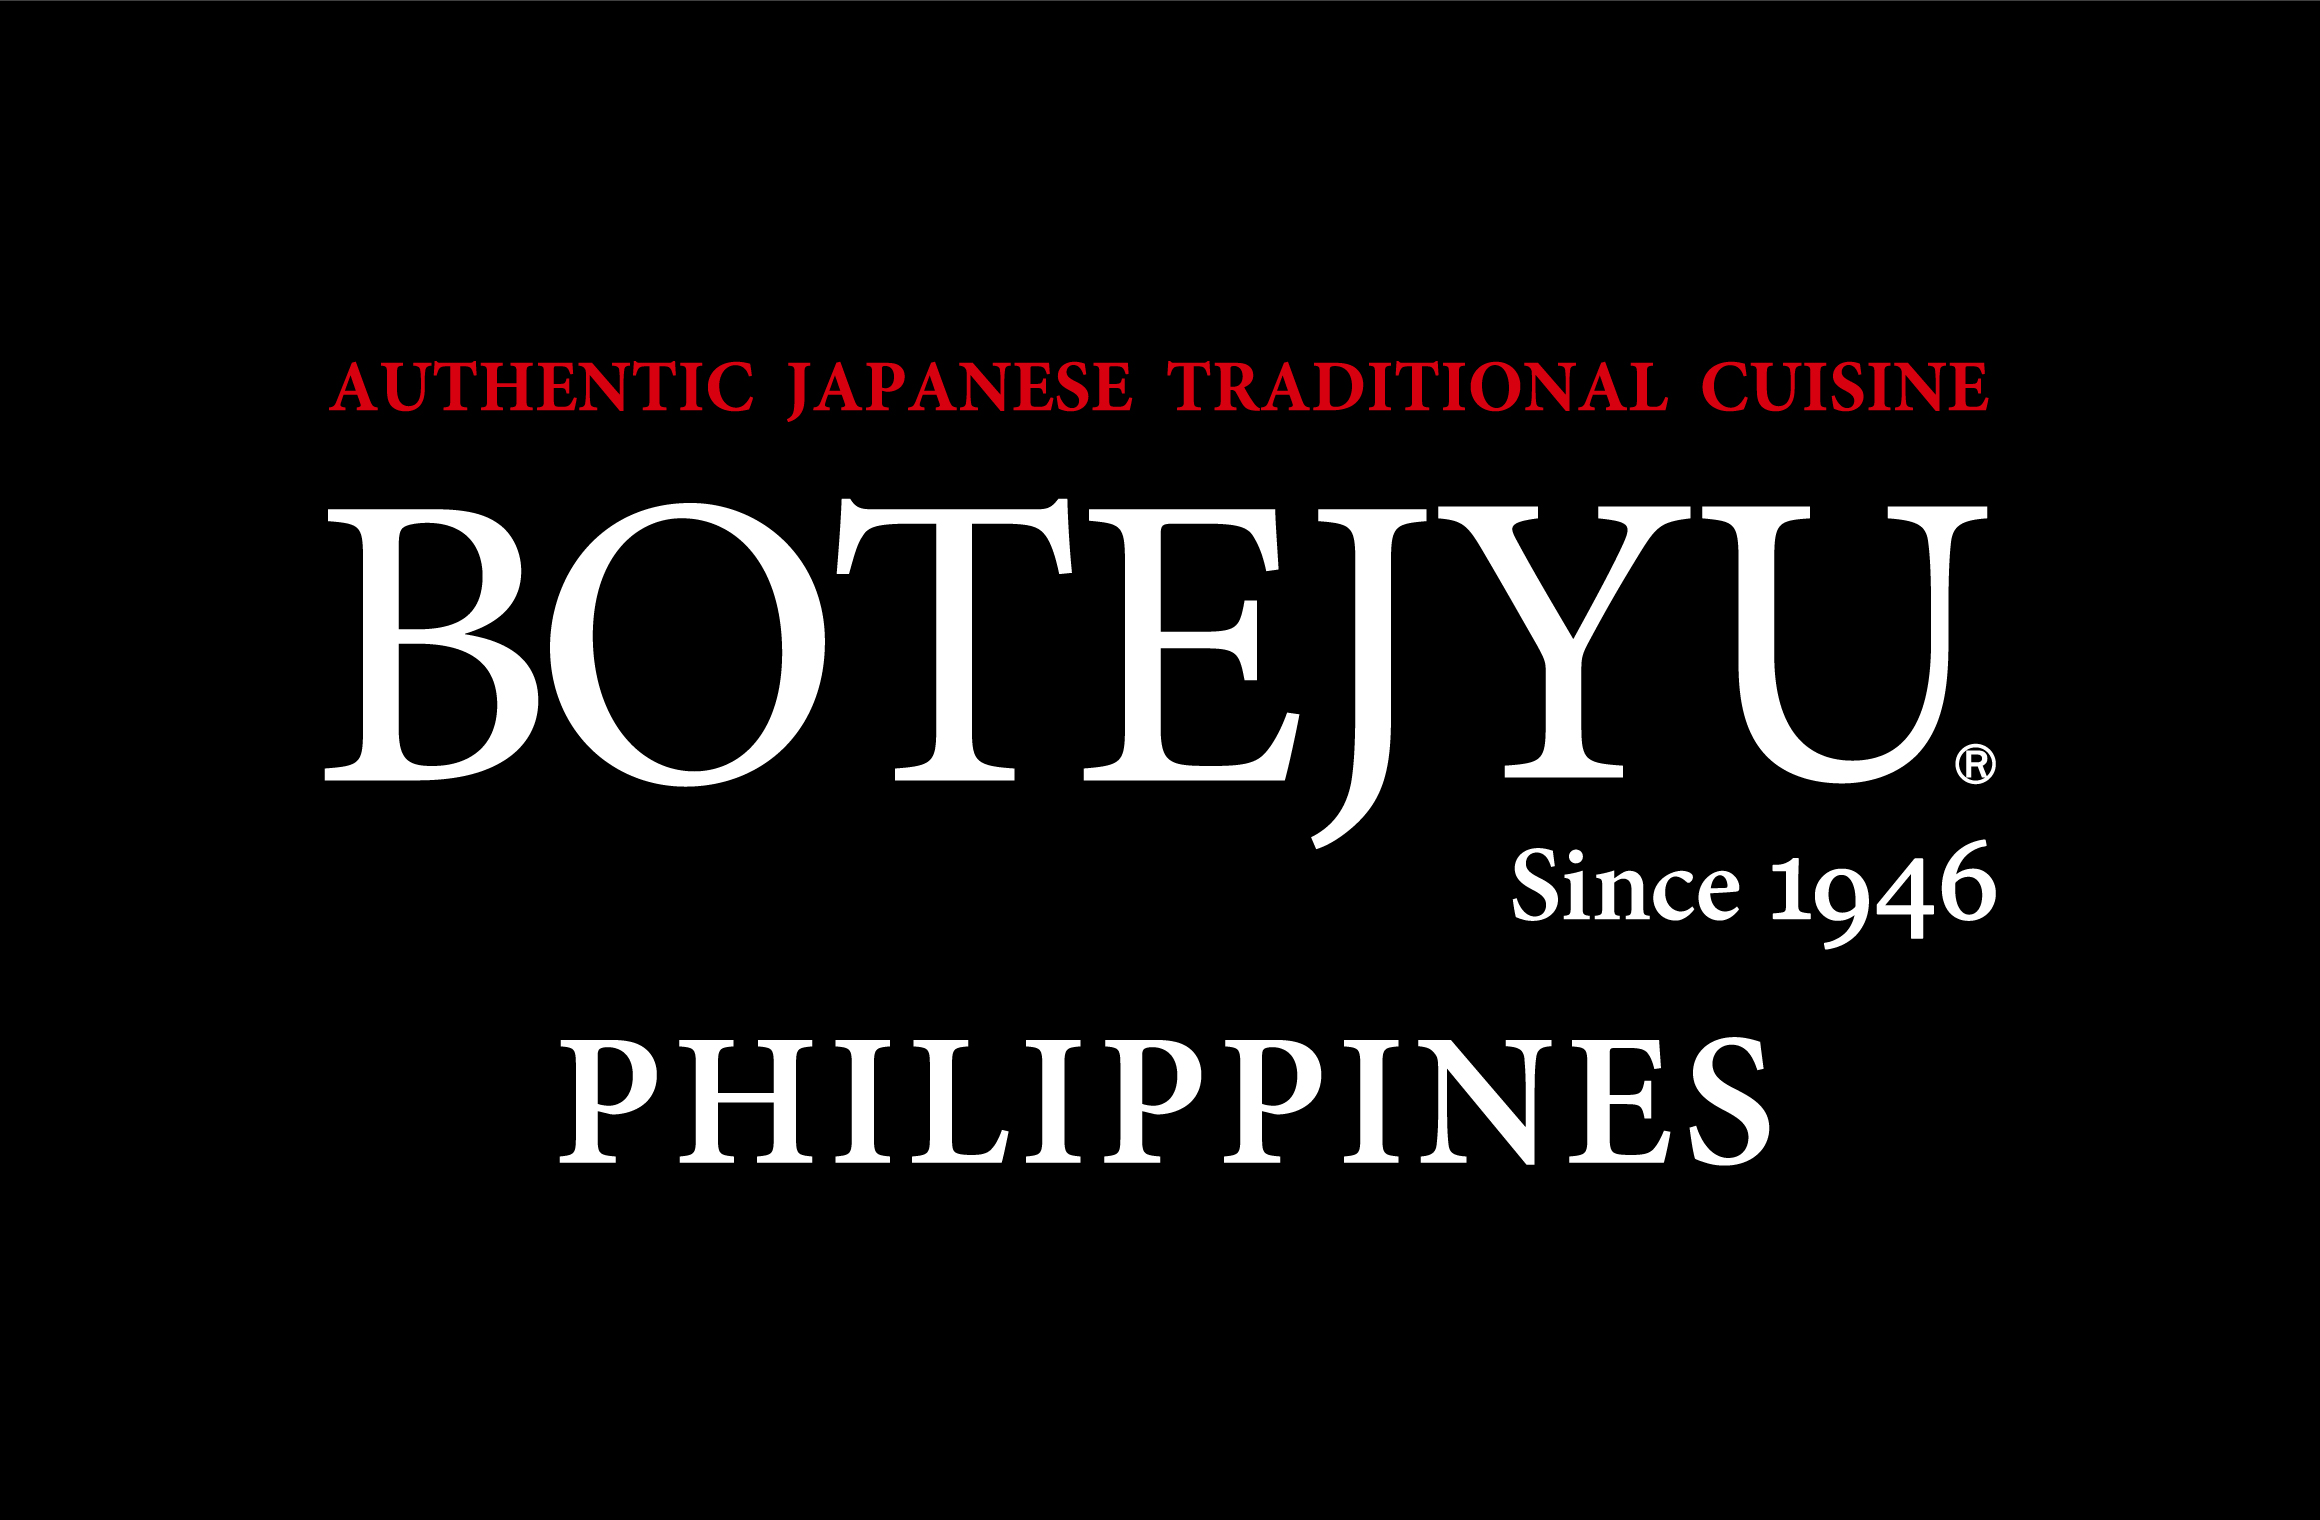 「BOTEJYU® Philippines 39 / SM City East Ortigas」: オープングセレモニーを開催致しました。